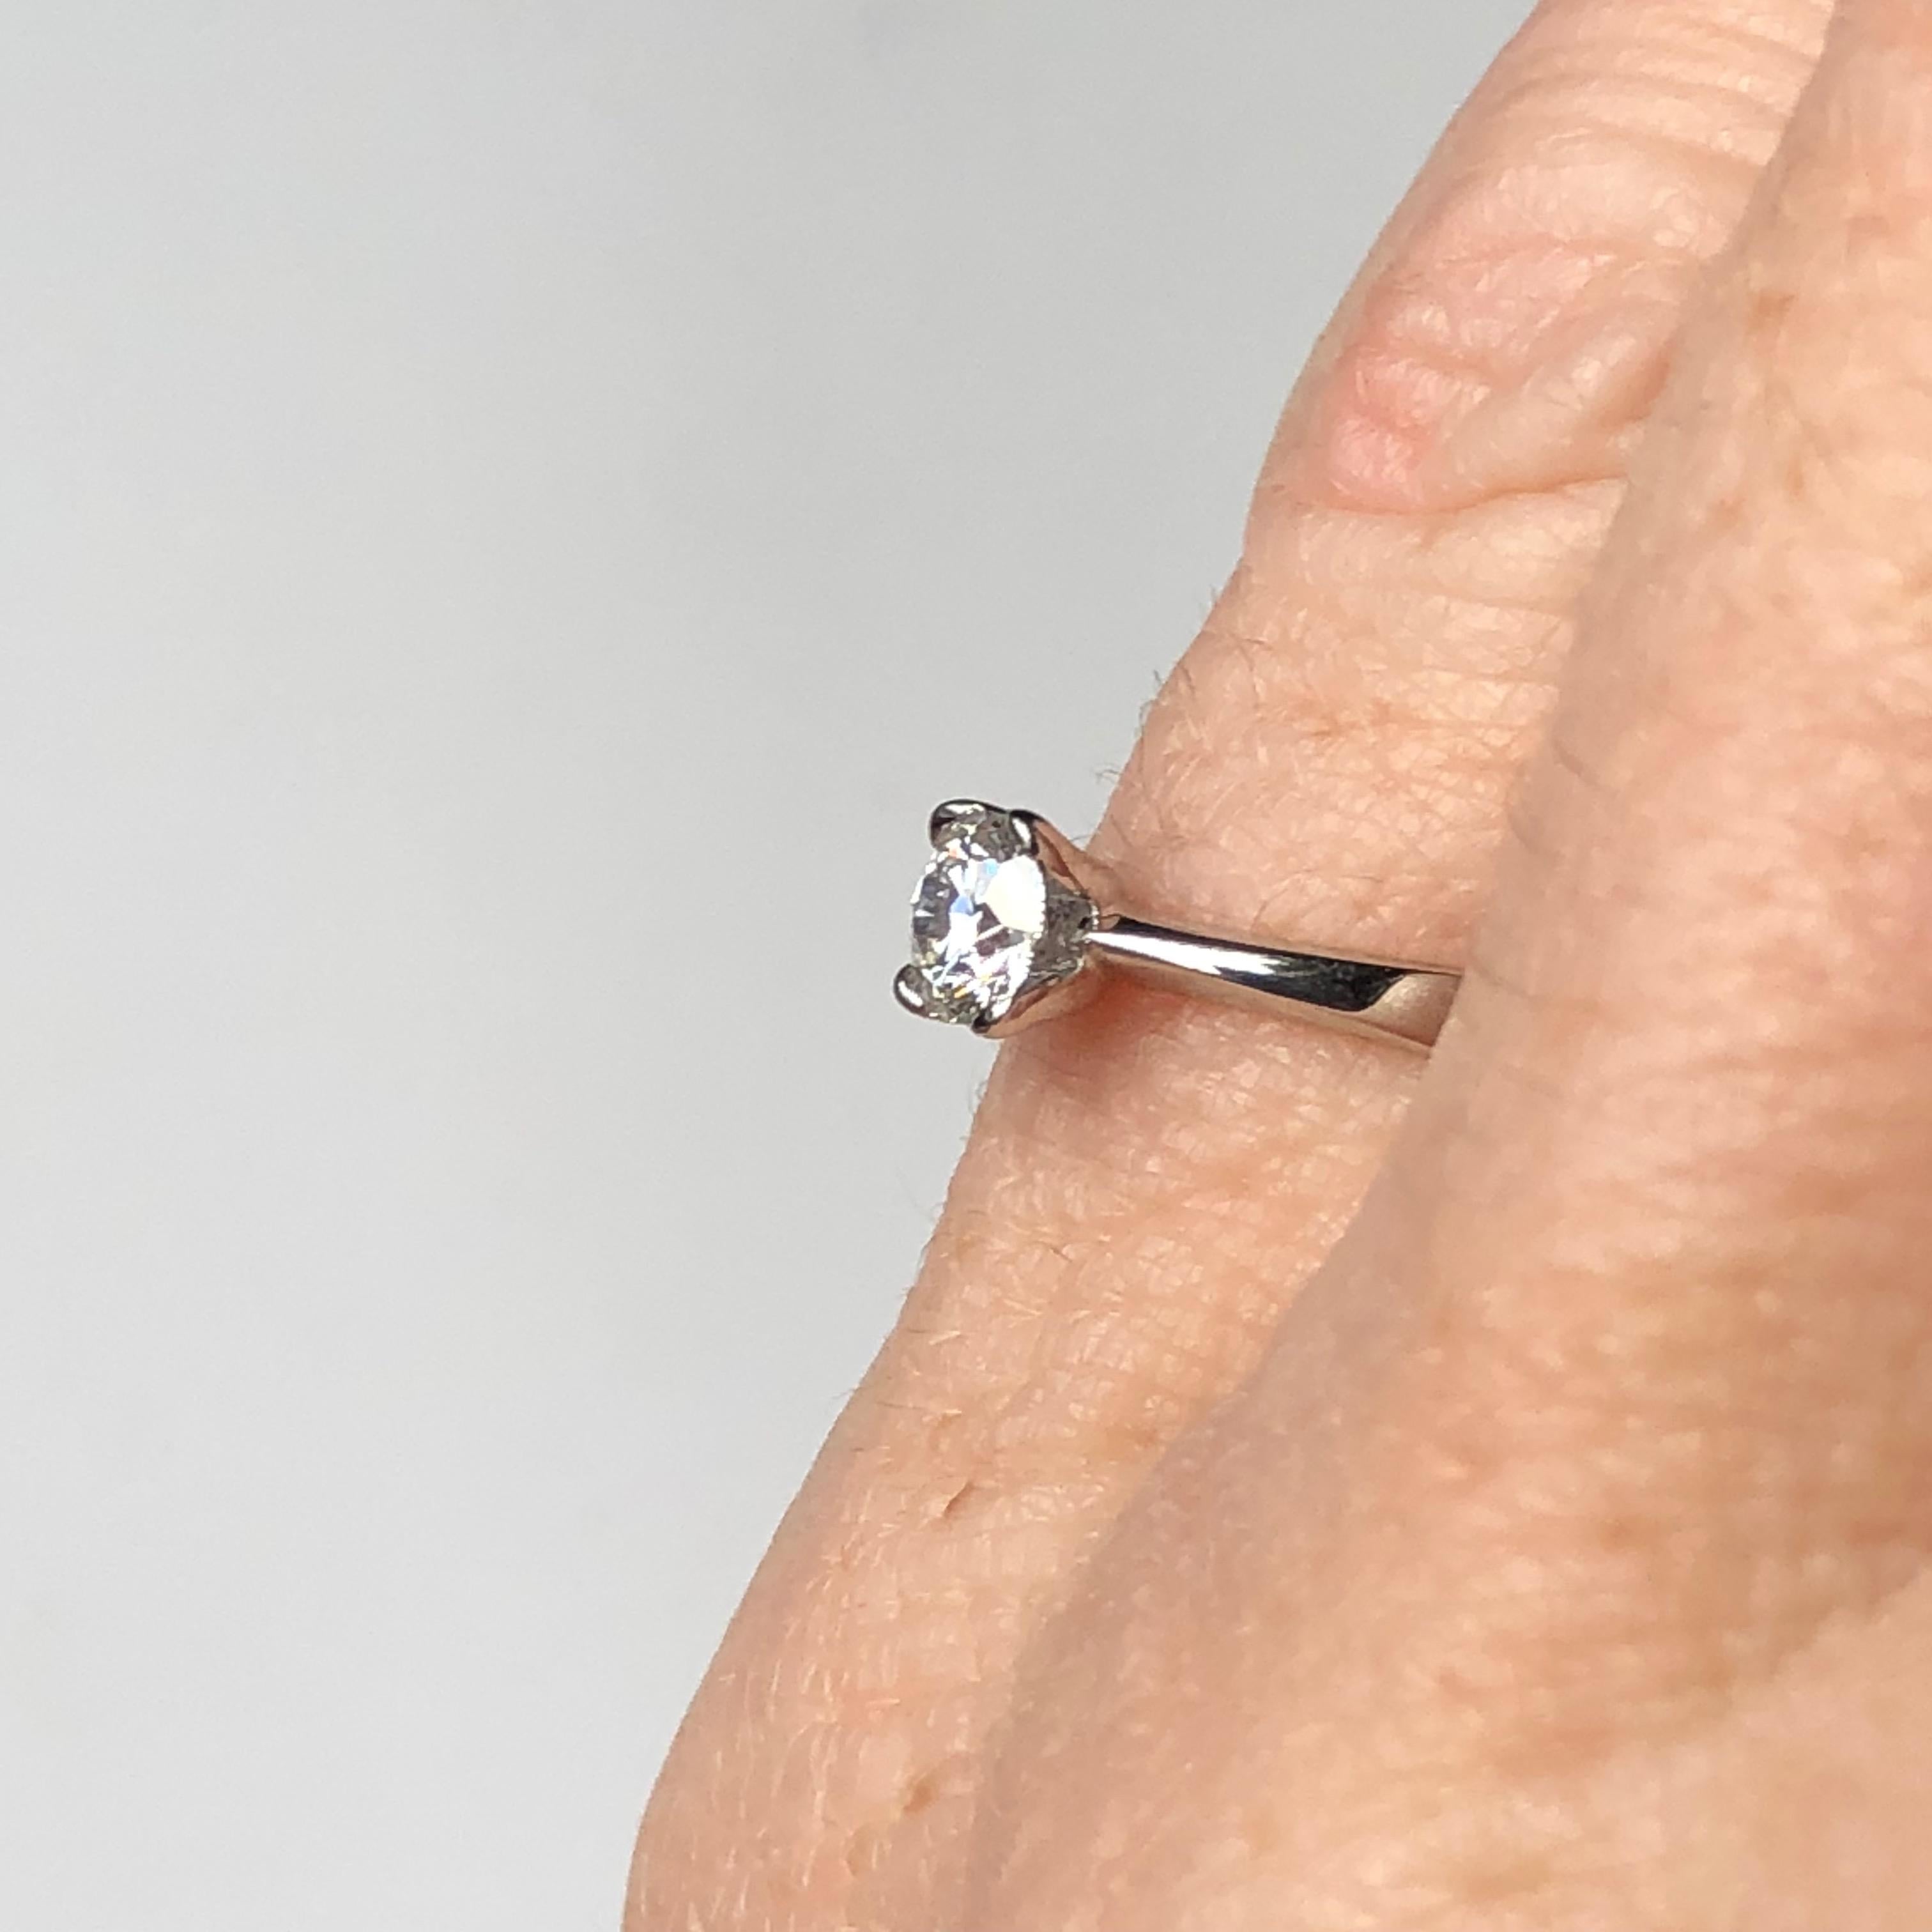 Round Cut Solitaire Diamond Engagement Ring 18 Karat Gold .33 Carat G Color VS Clarity For Sale